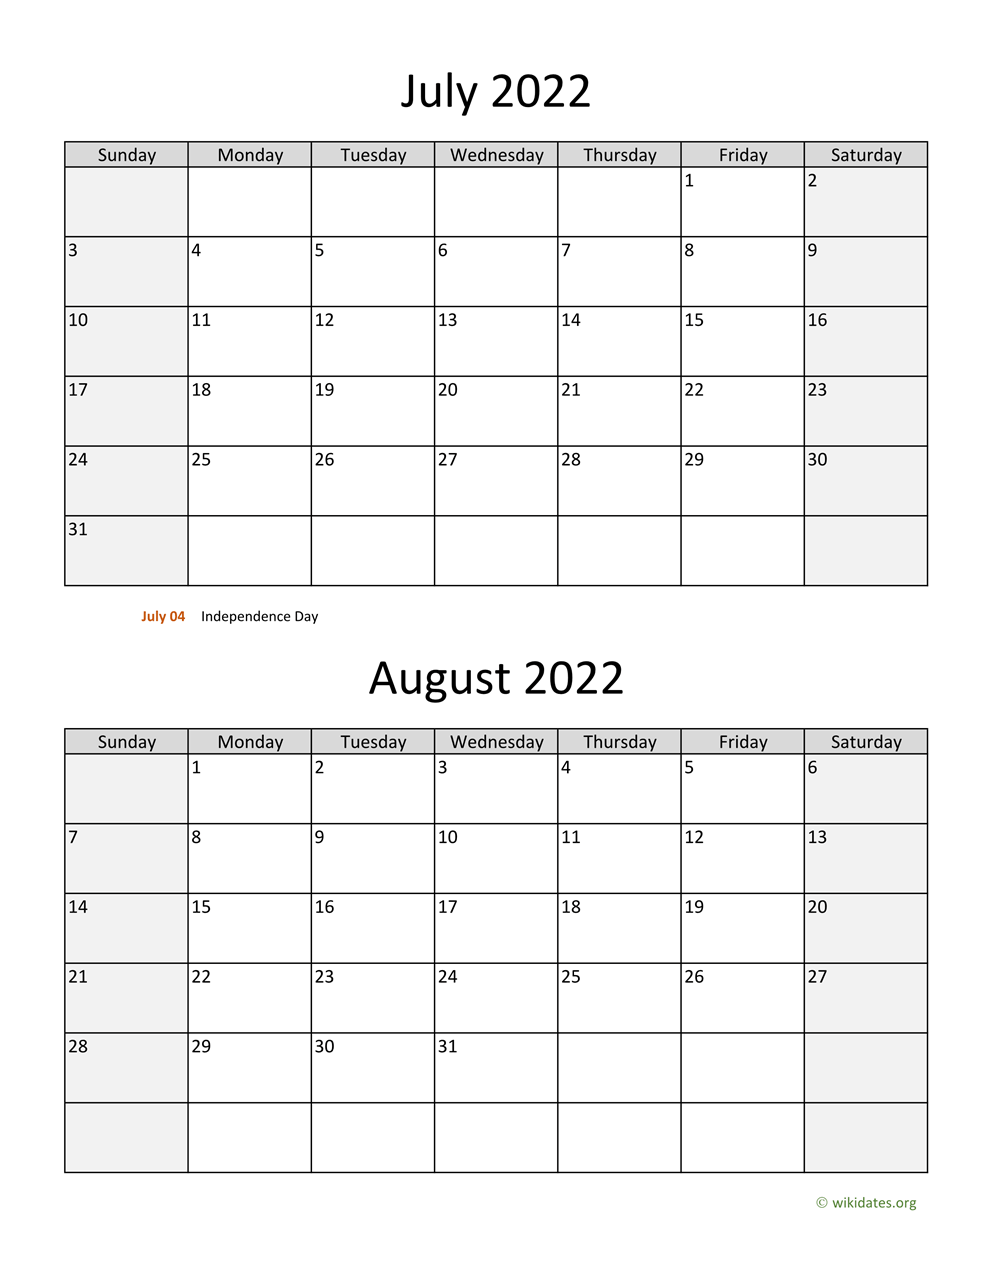 June July August 2022 Calendar July And August 2022 Calendar | Wikidates.org